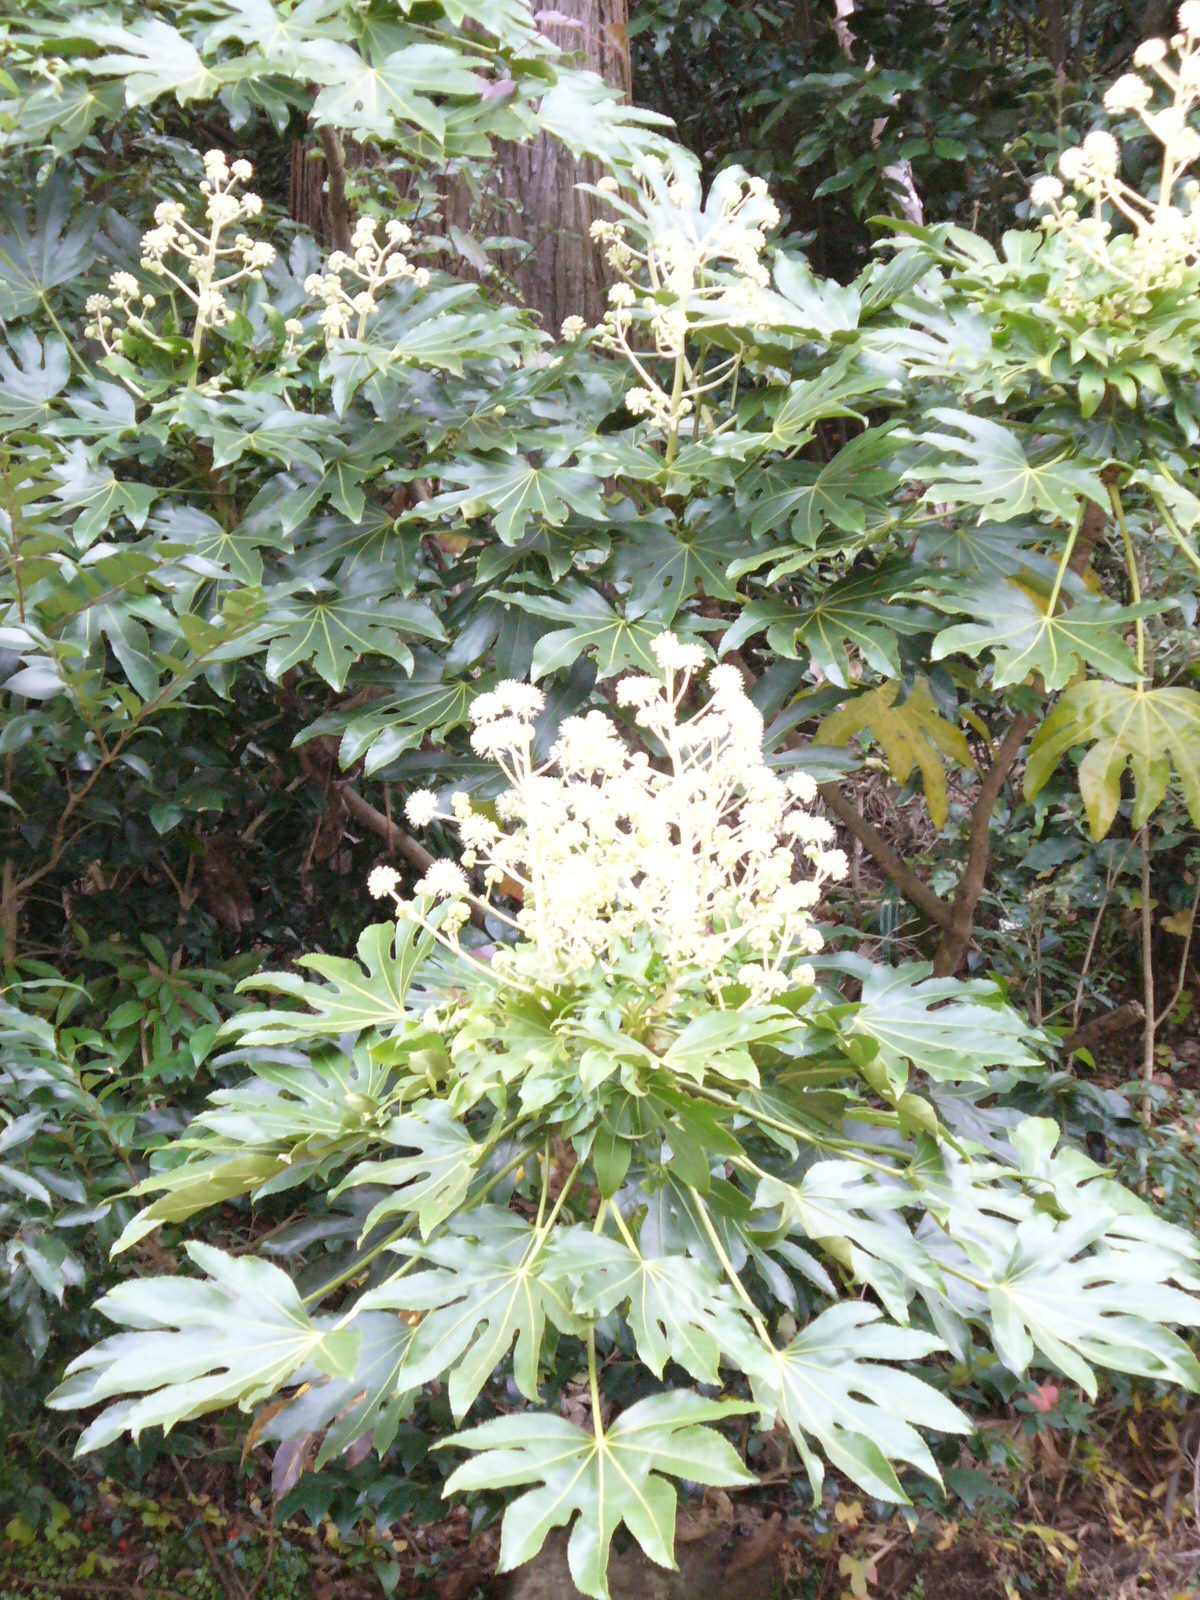 Virág,Japán arália (Fatsia japonica)